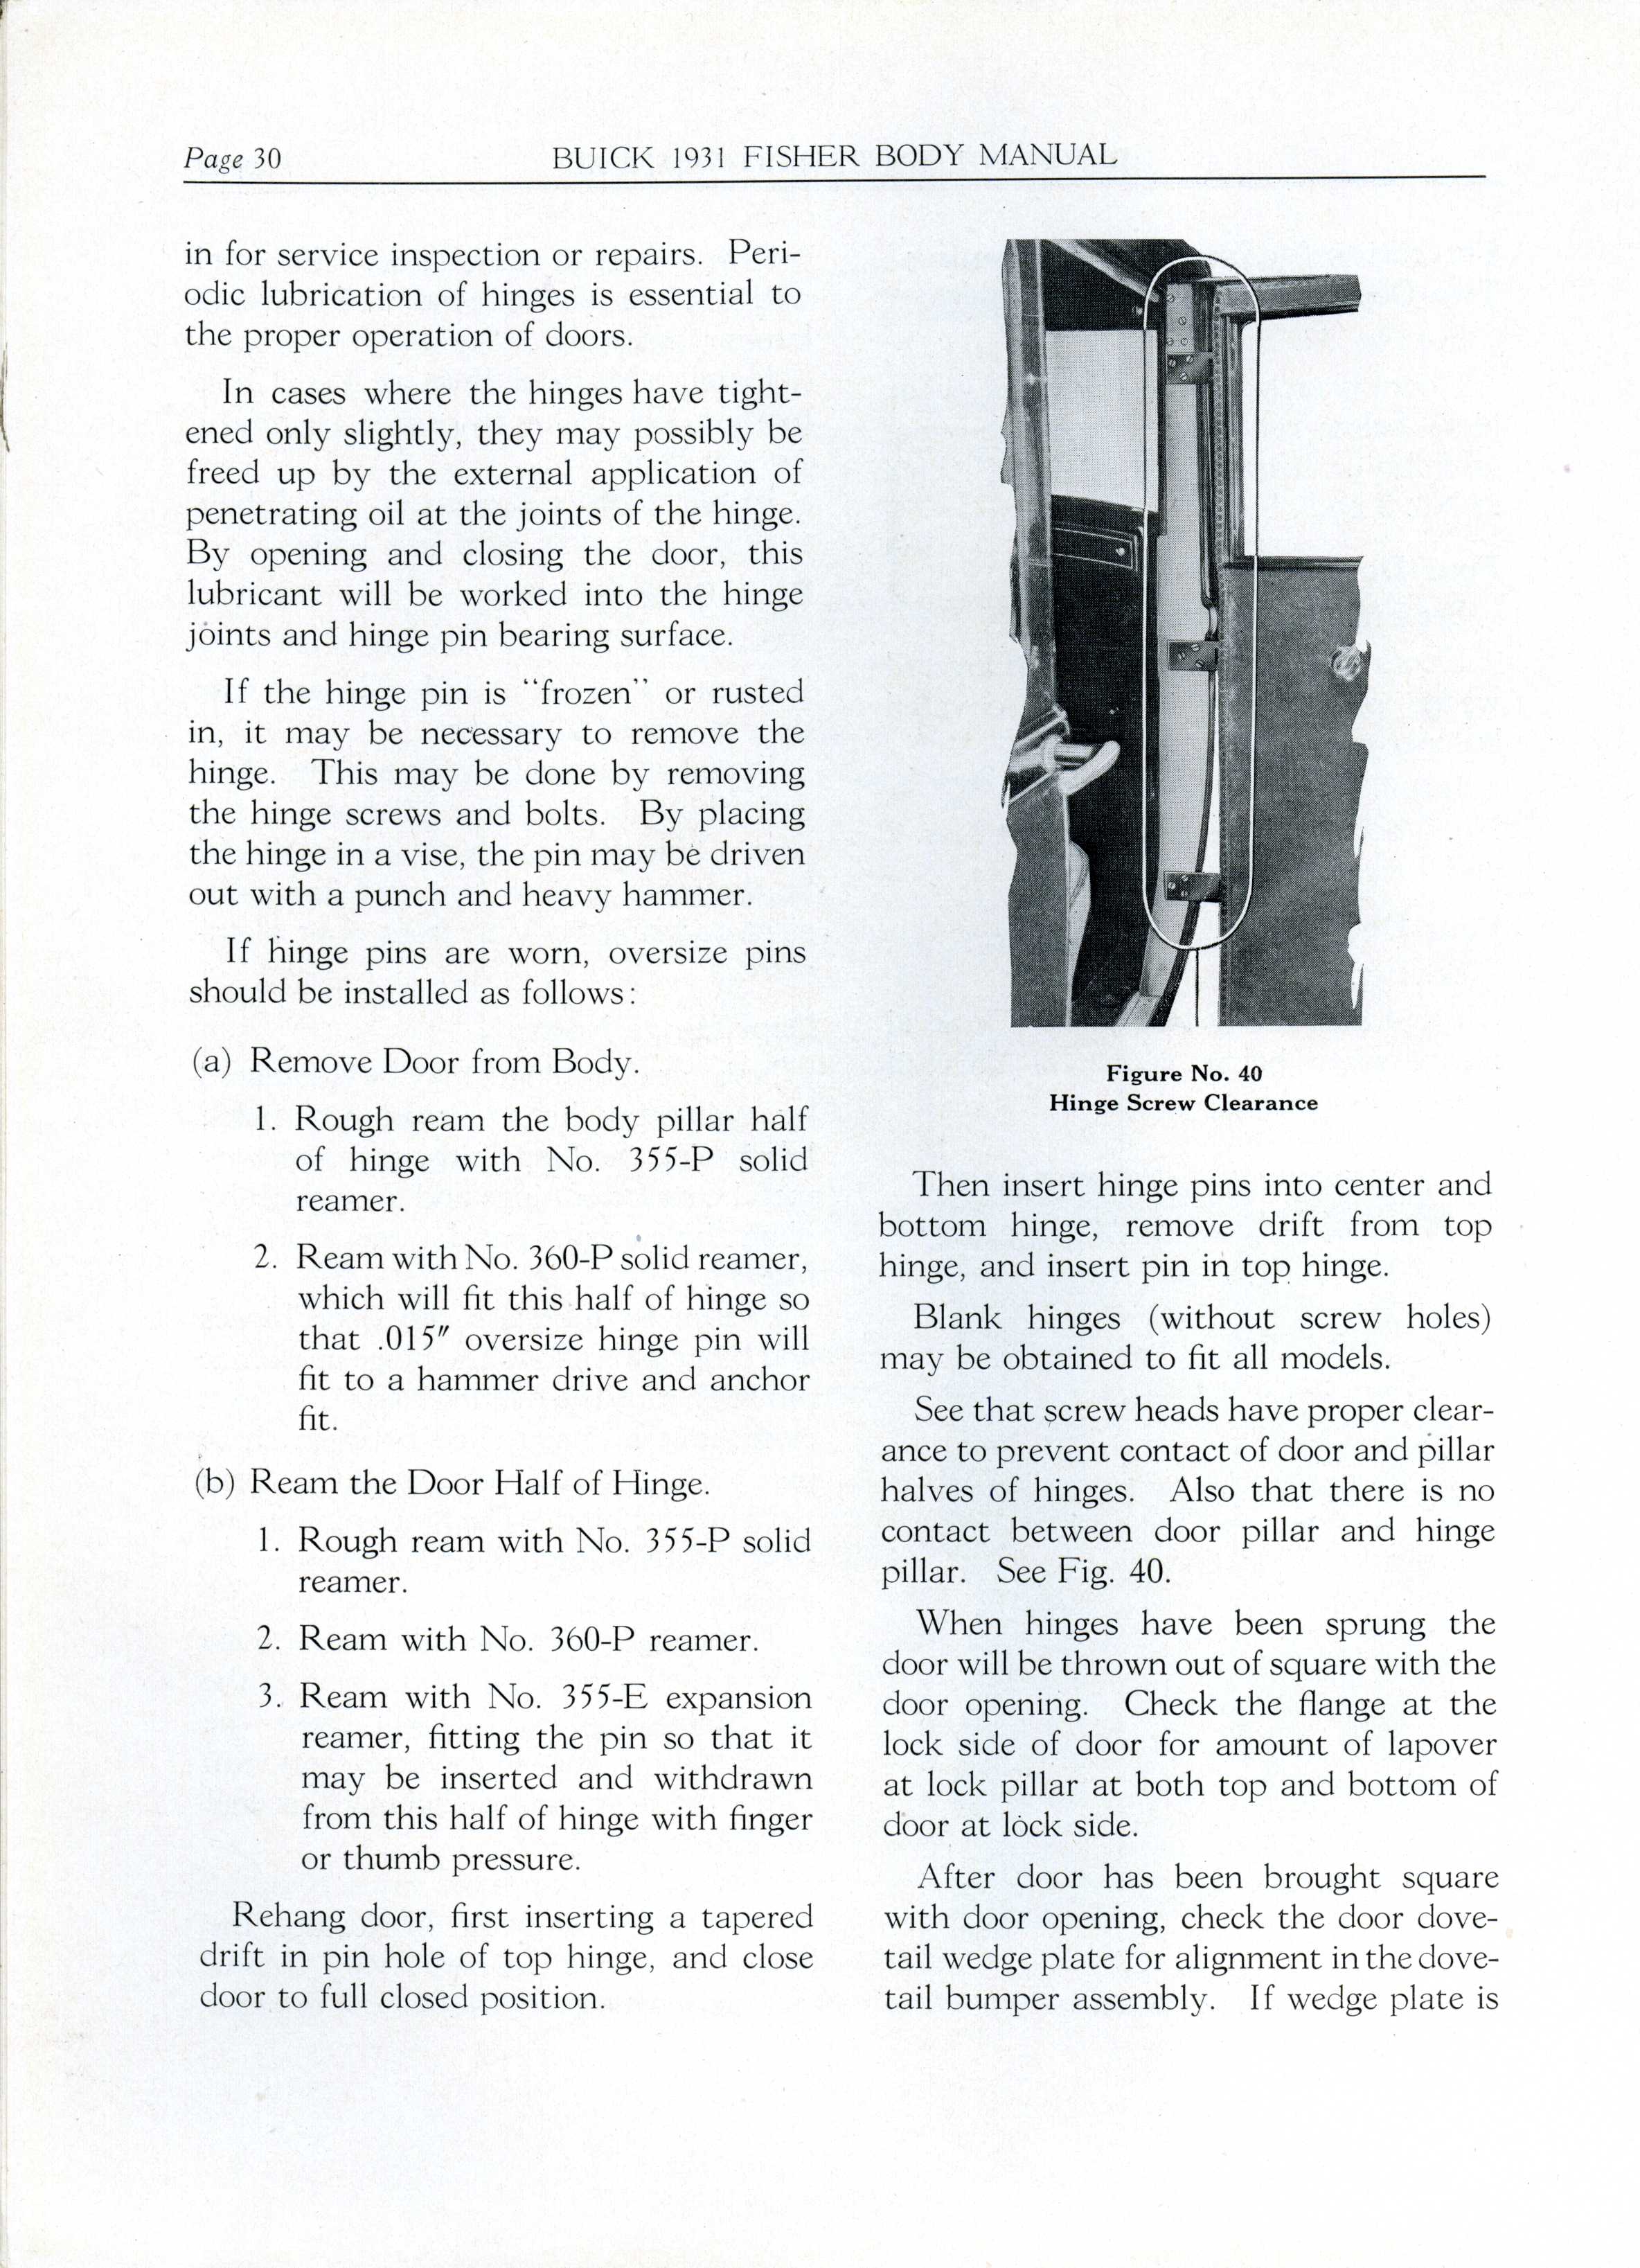 1931 Buick Fisher Body Manual-30